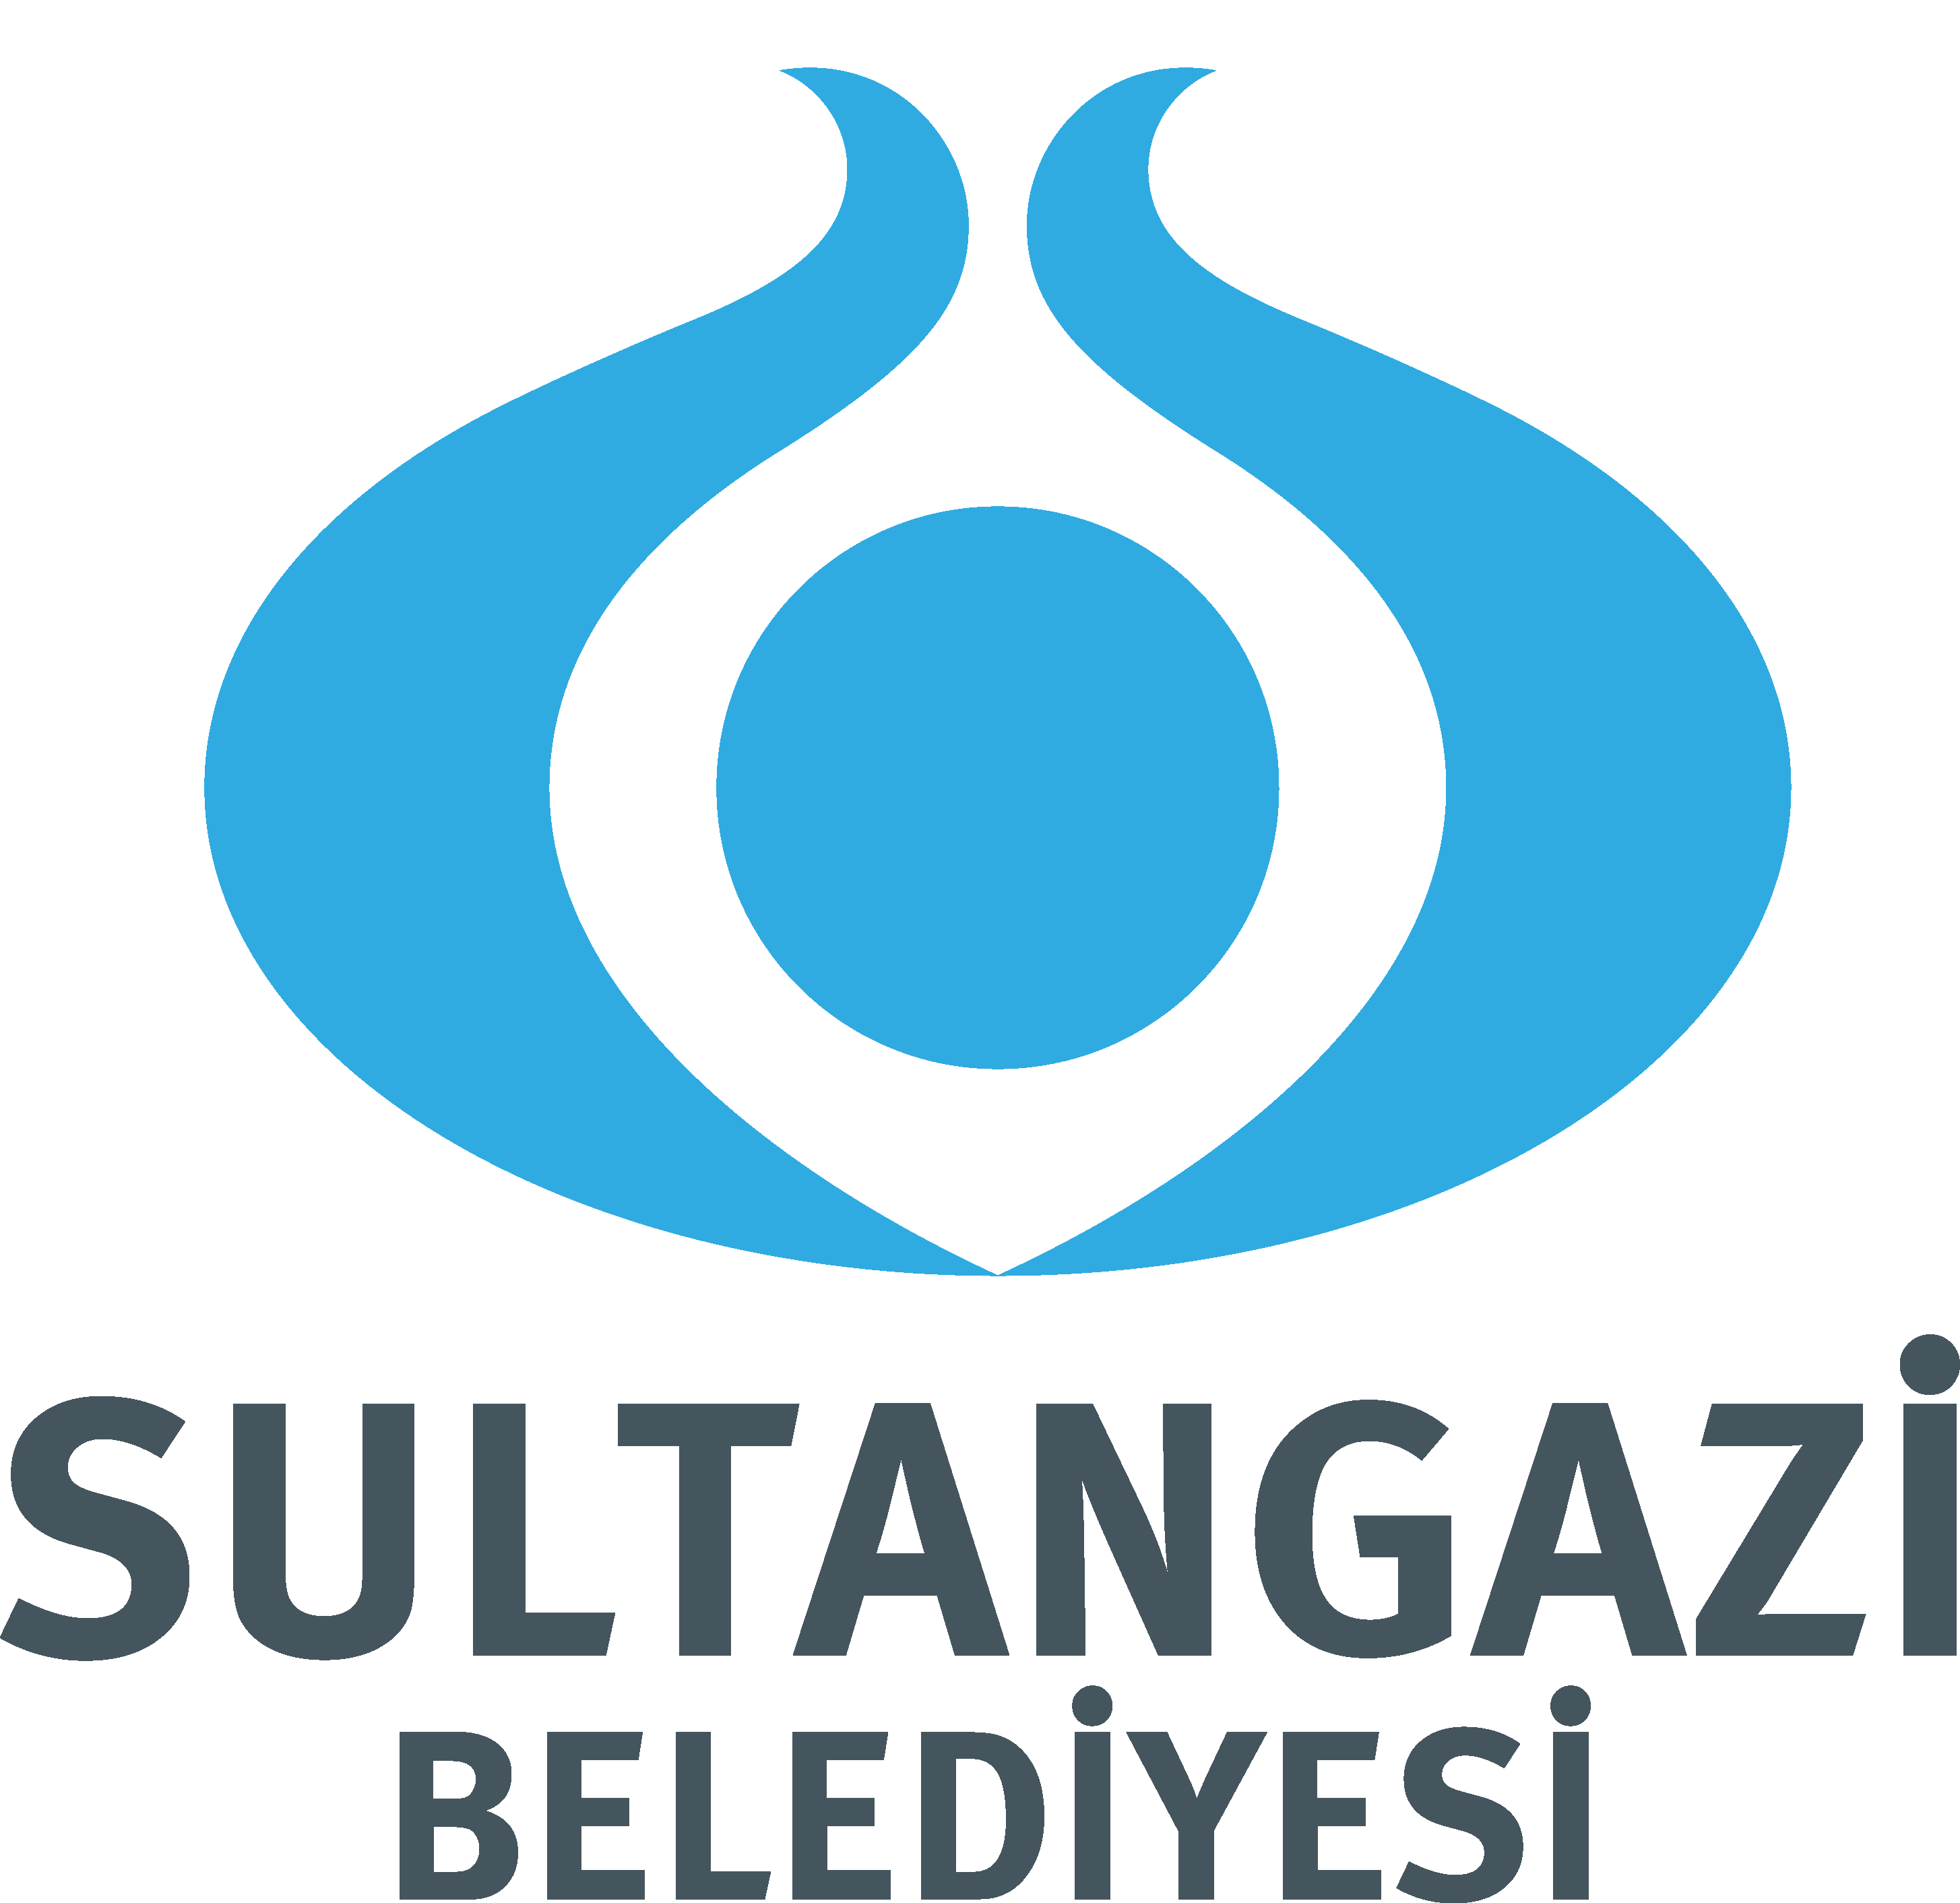 Sultangazi Belediyesi Logo (İstanbul) png